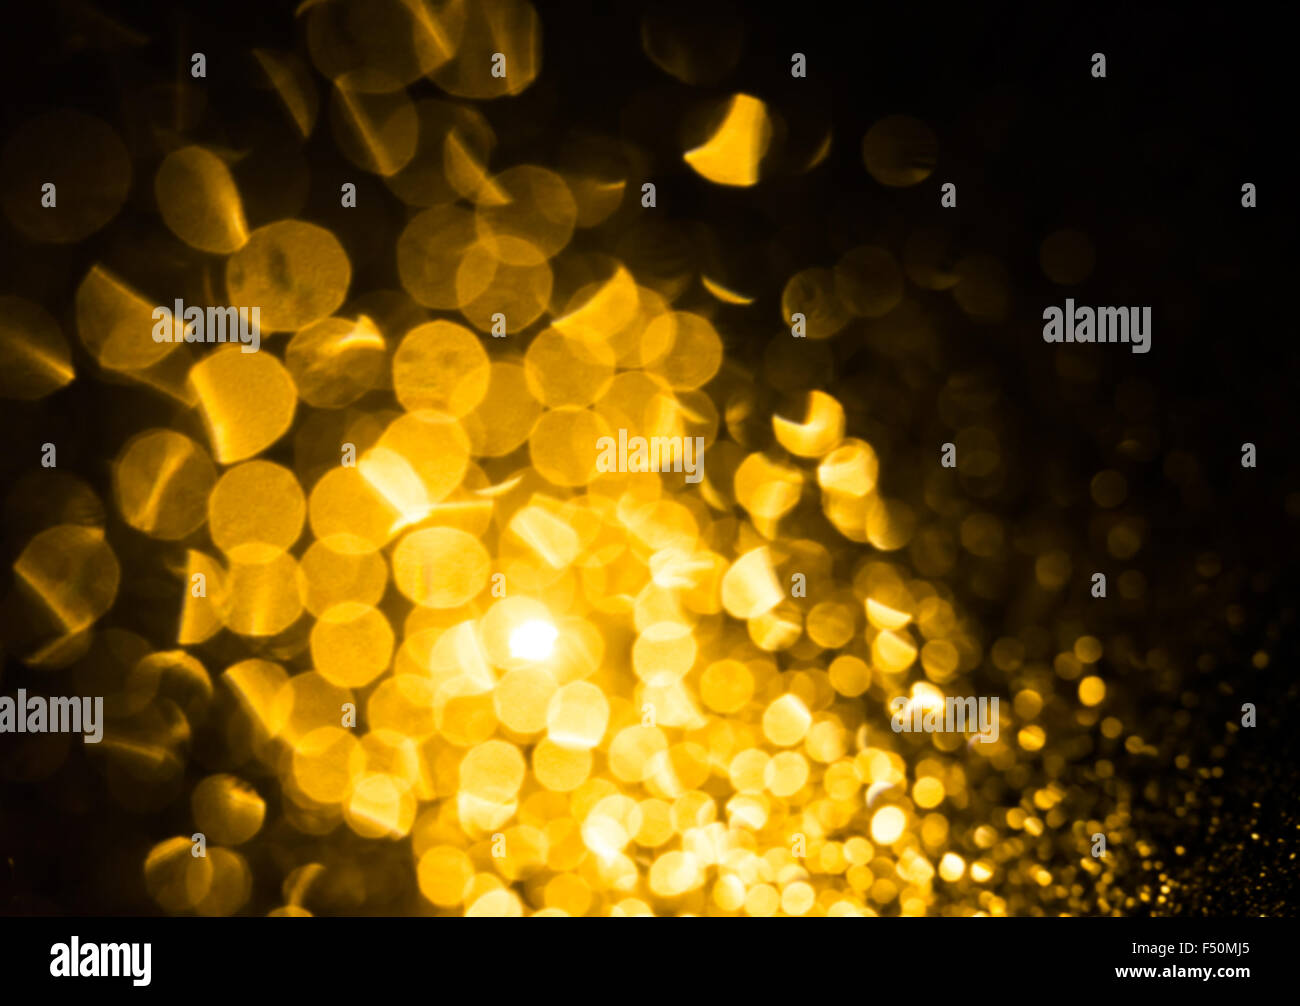 Abstract sfondo sfocato con le luci gialle bokeh di fondo Foto Stock